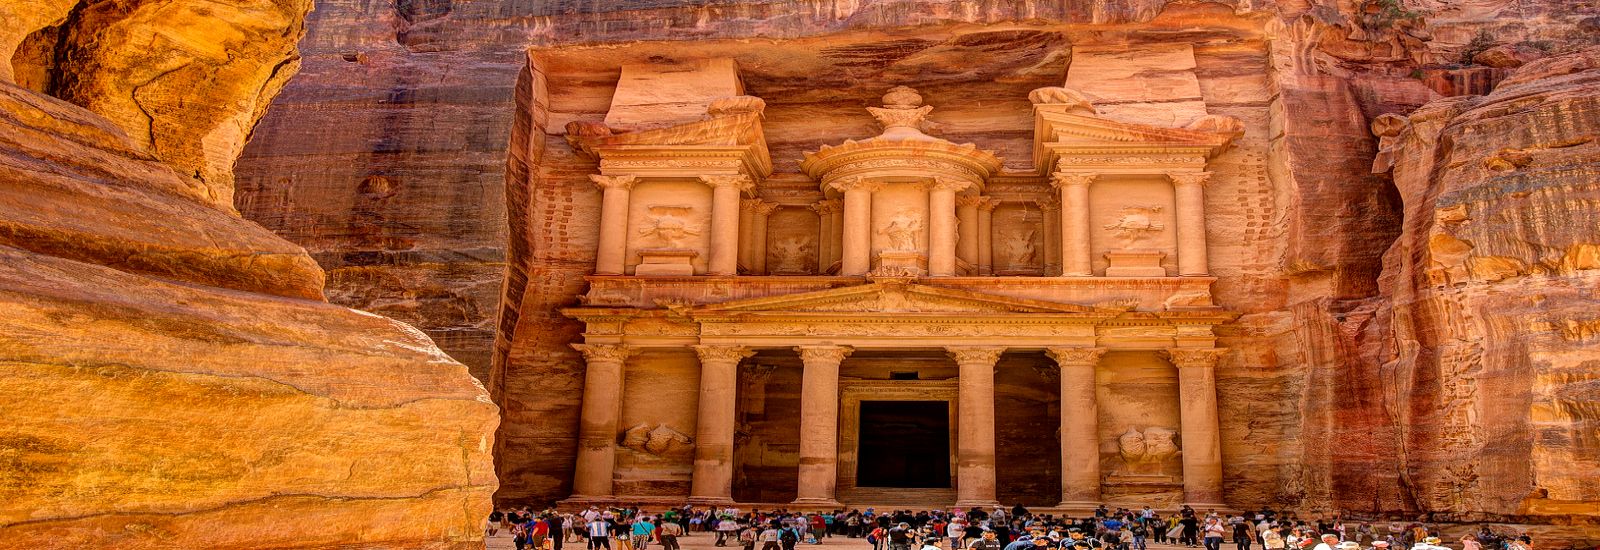 From Jerusalem/Tel Aviv: 3 Day Tour to Petra, Wadi Rum and Jordan Highlights